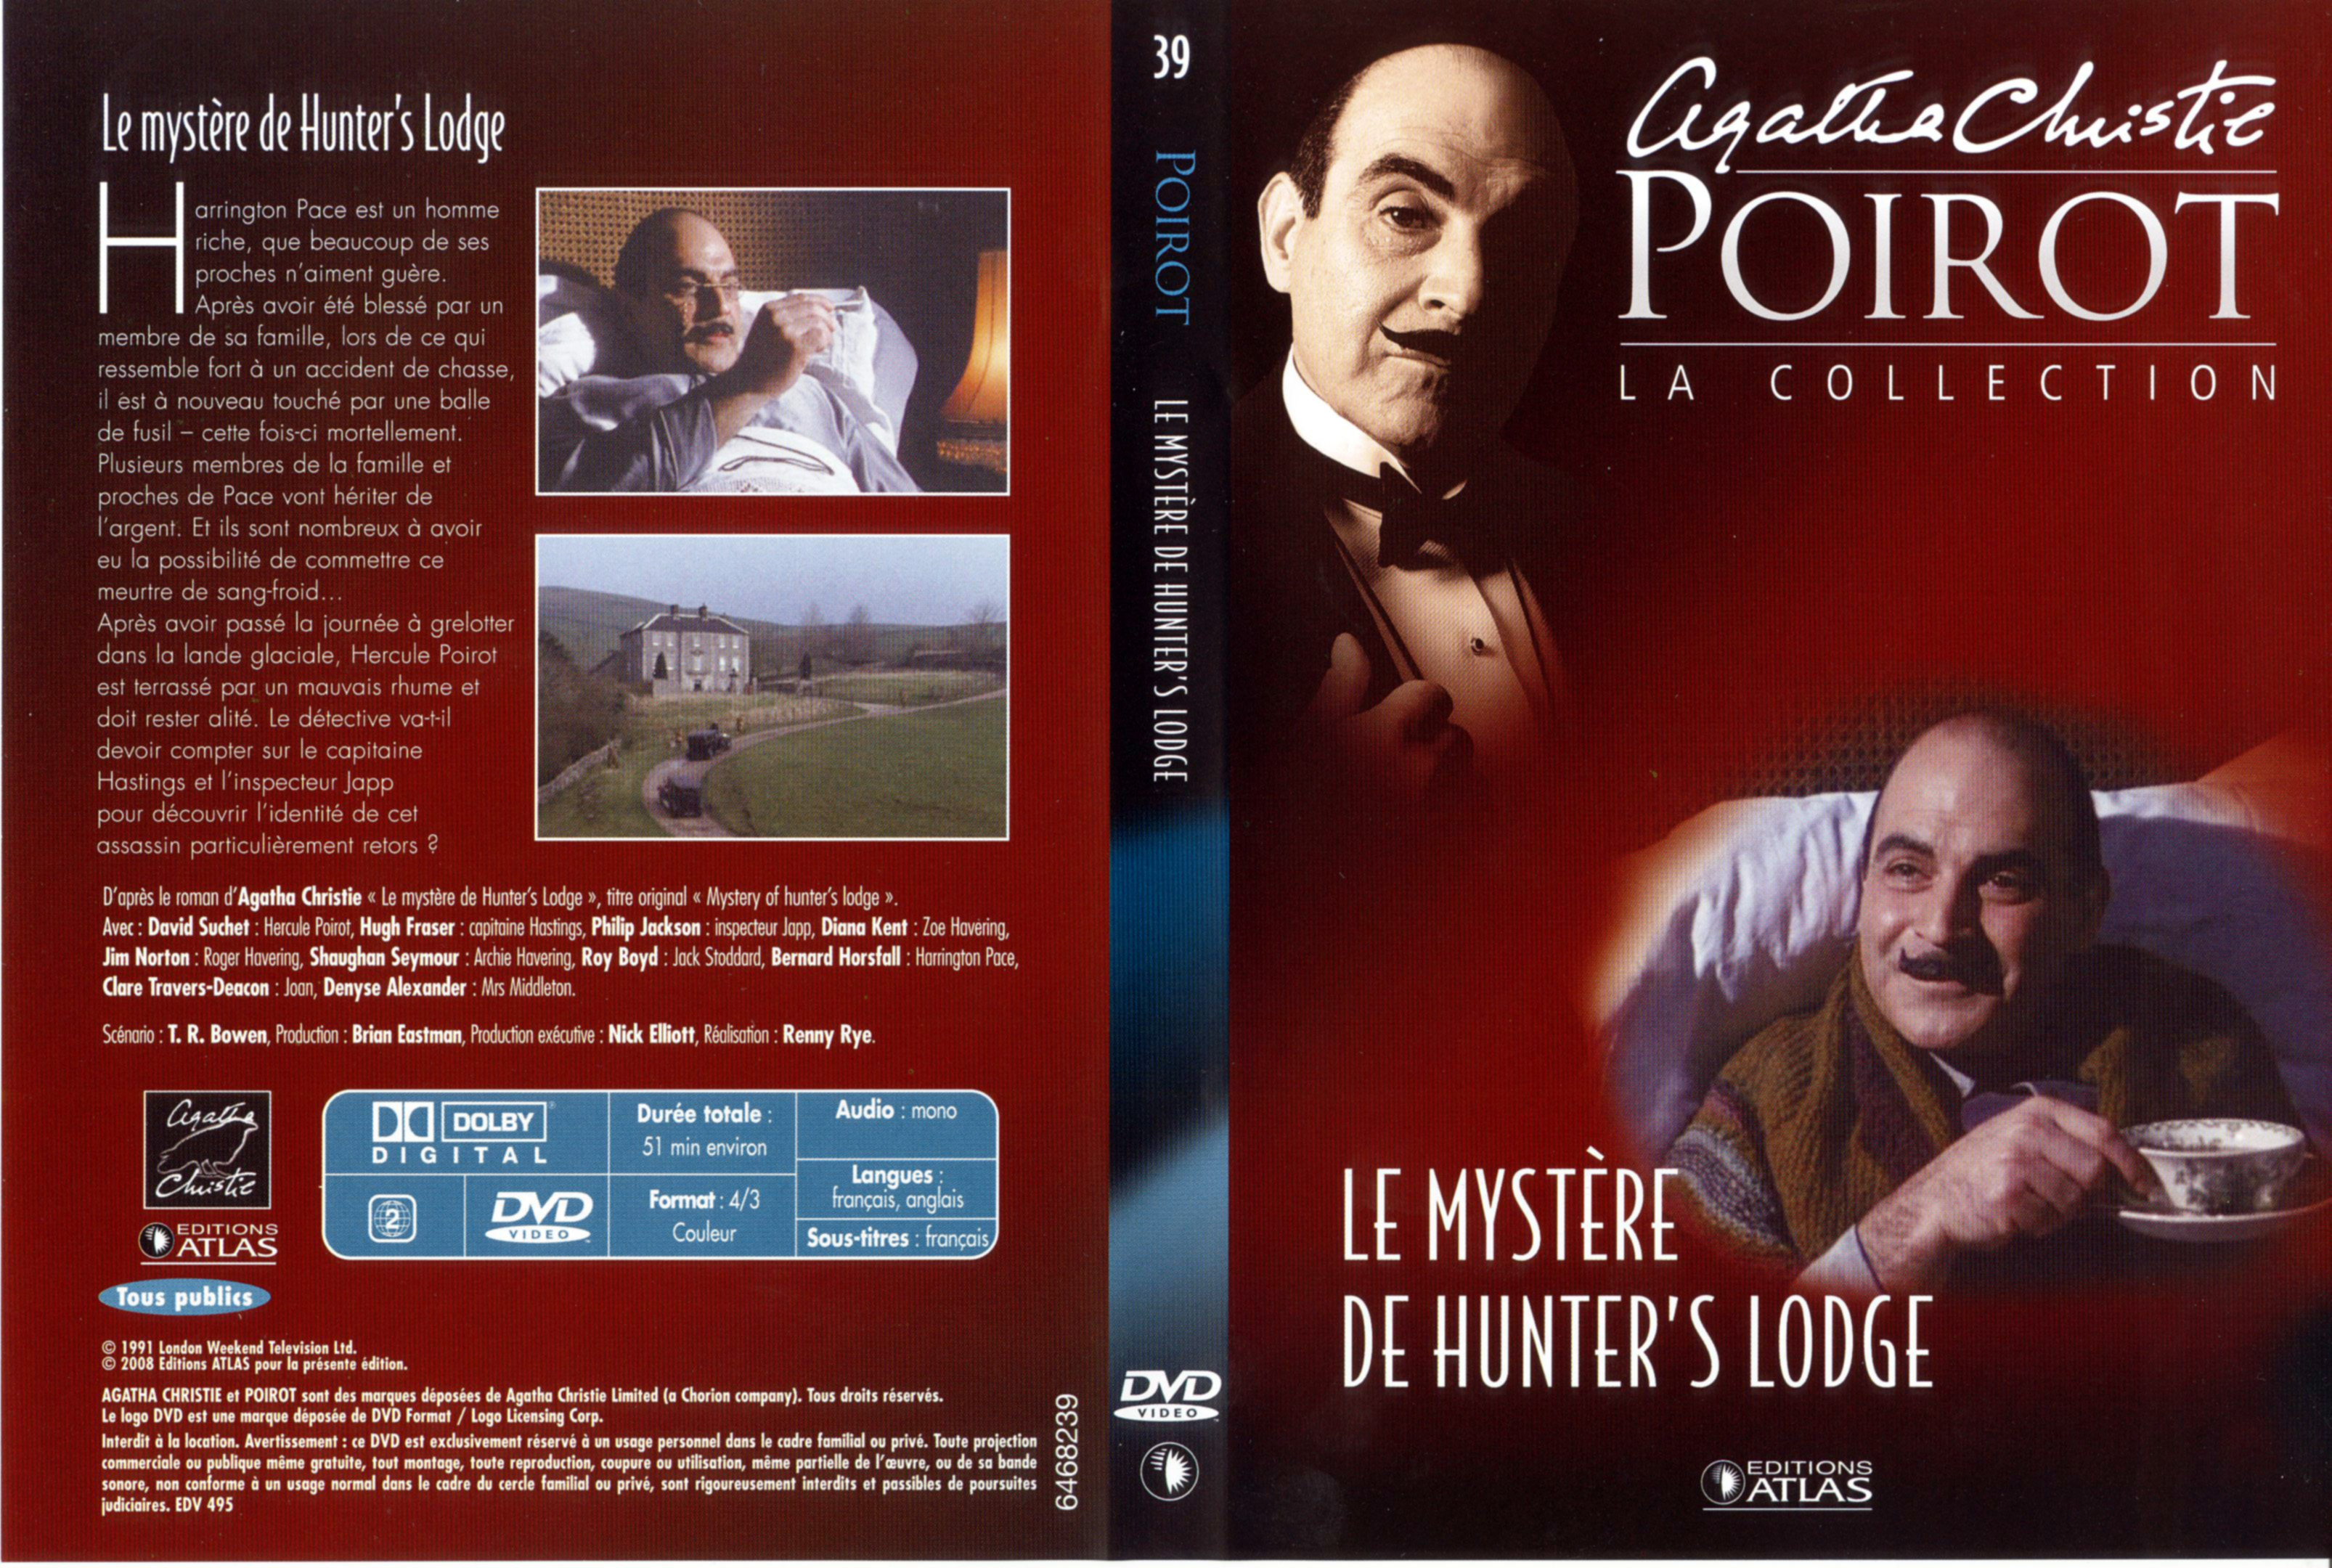 Jaquette DVD Hercule Poirot vol 39